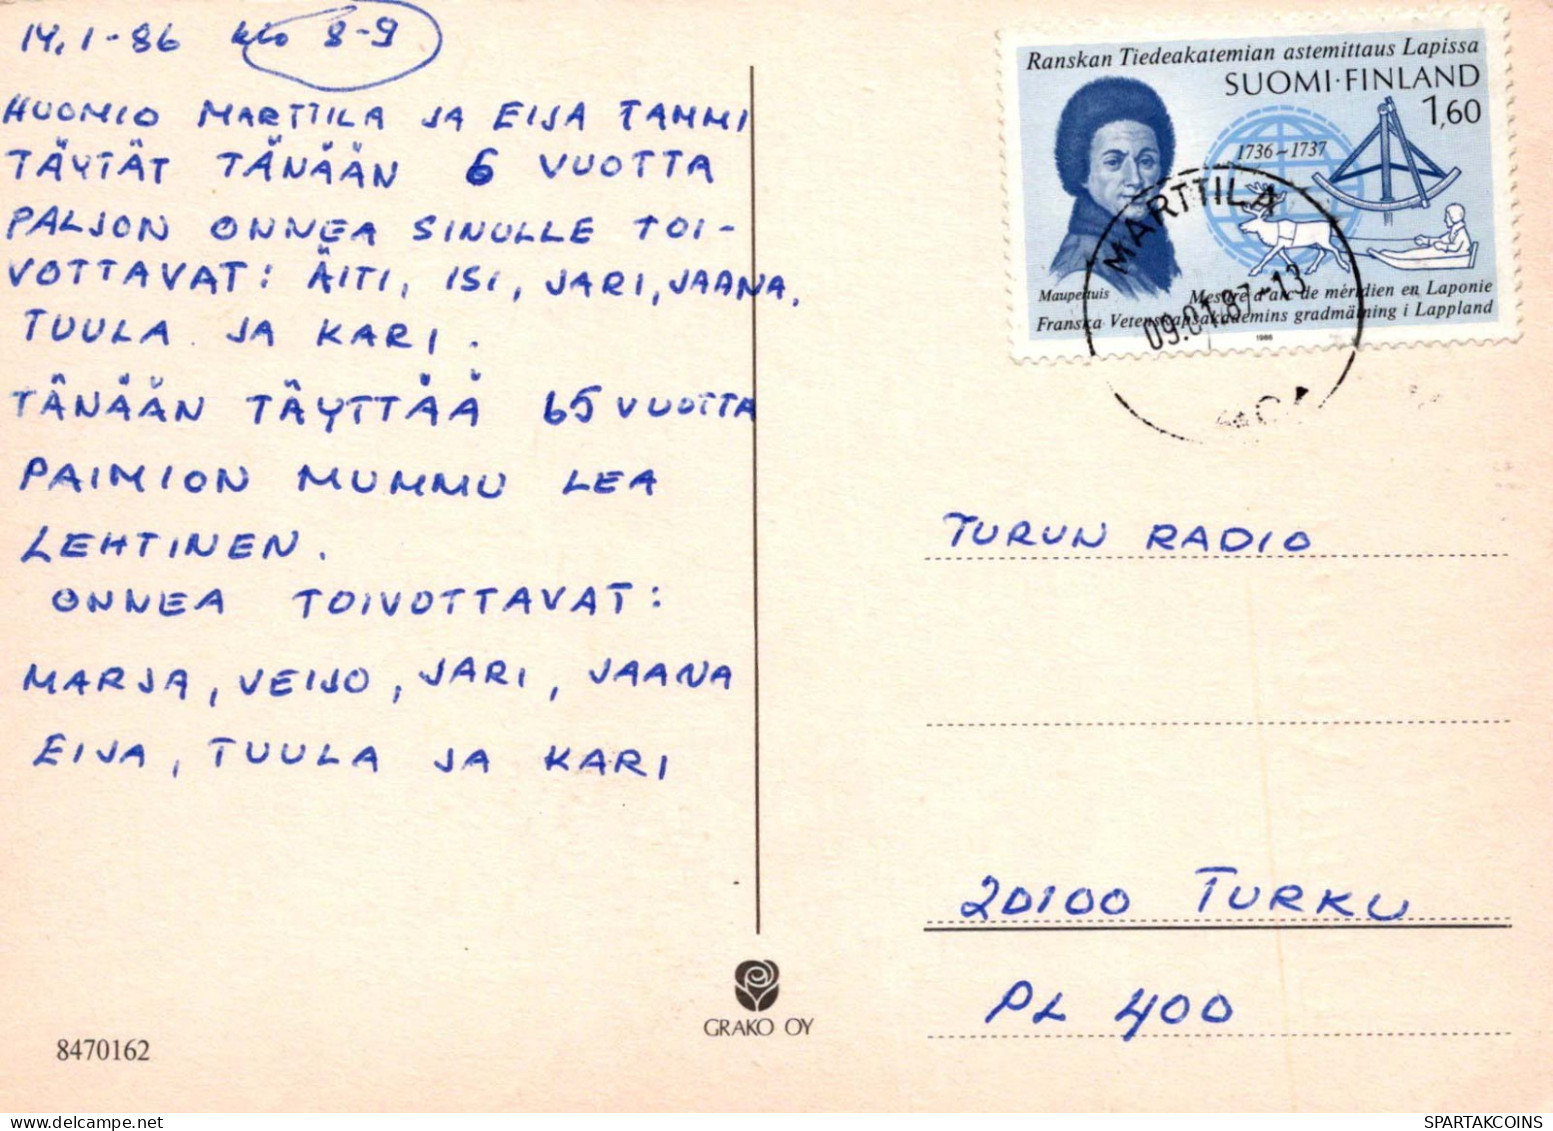 Feliz Año Navidad NIÑOS HERRADURA Vintage Tarjeta Postal CPSM #PAU067.A - New Year